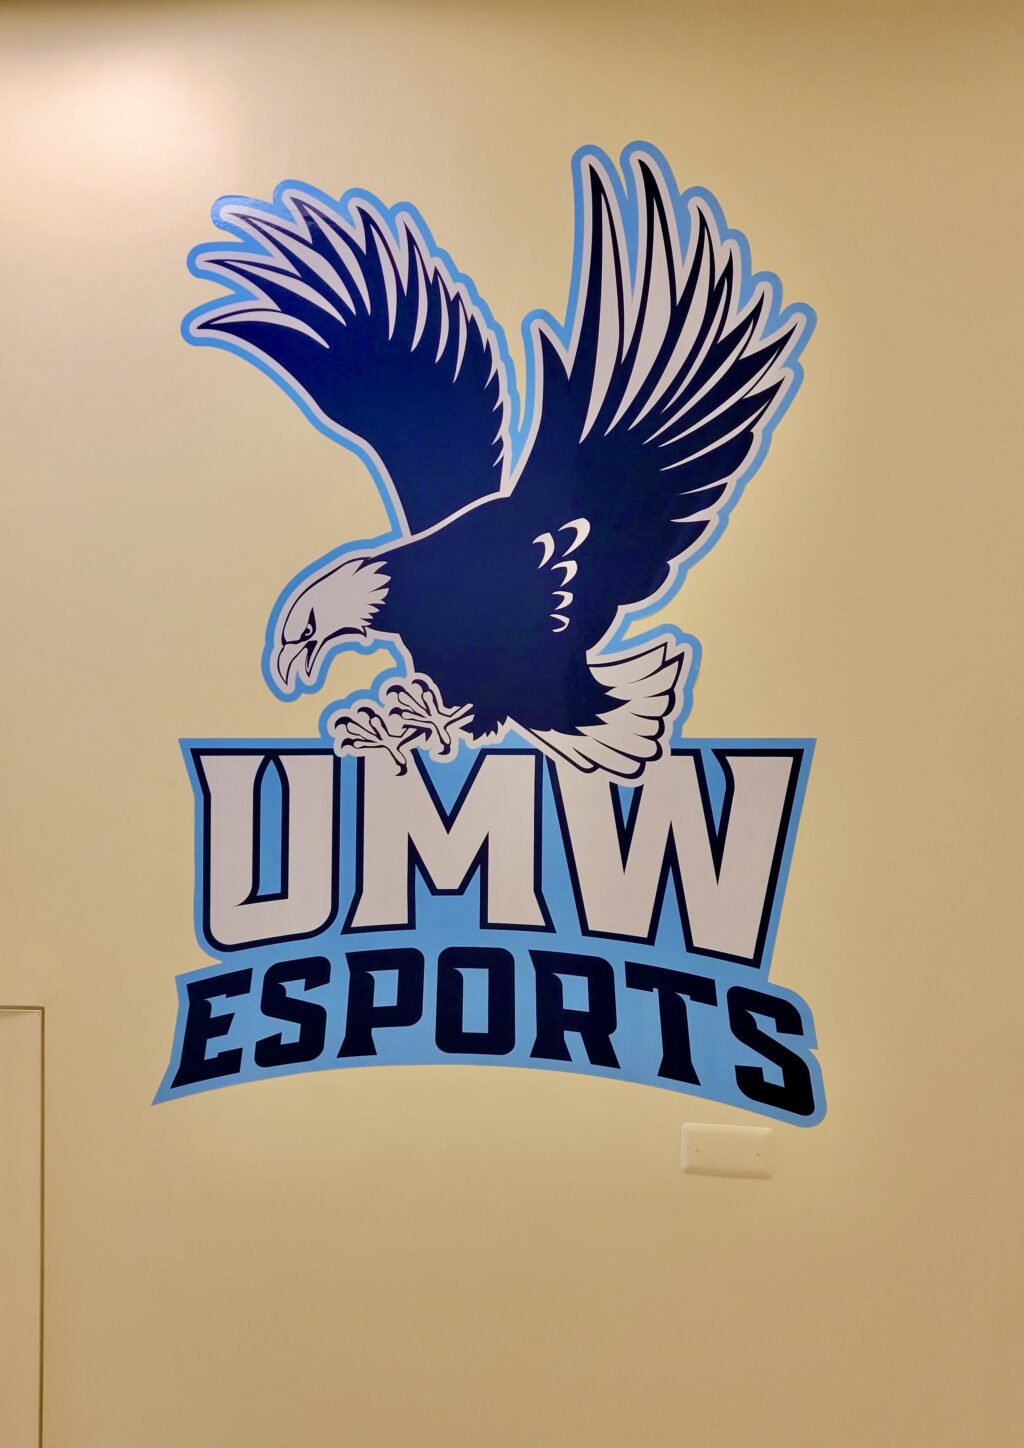 Eagle over the words: "UMW Esports."